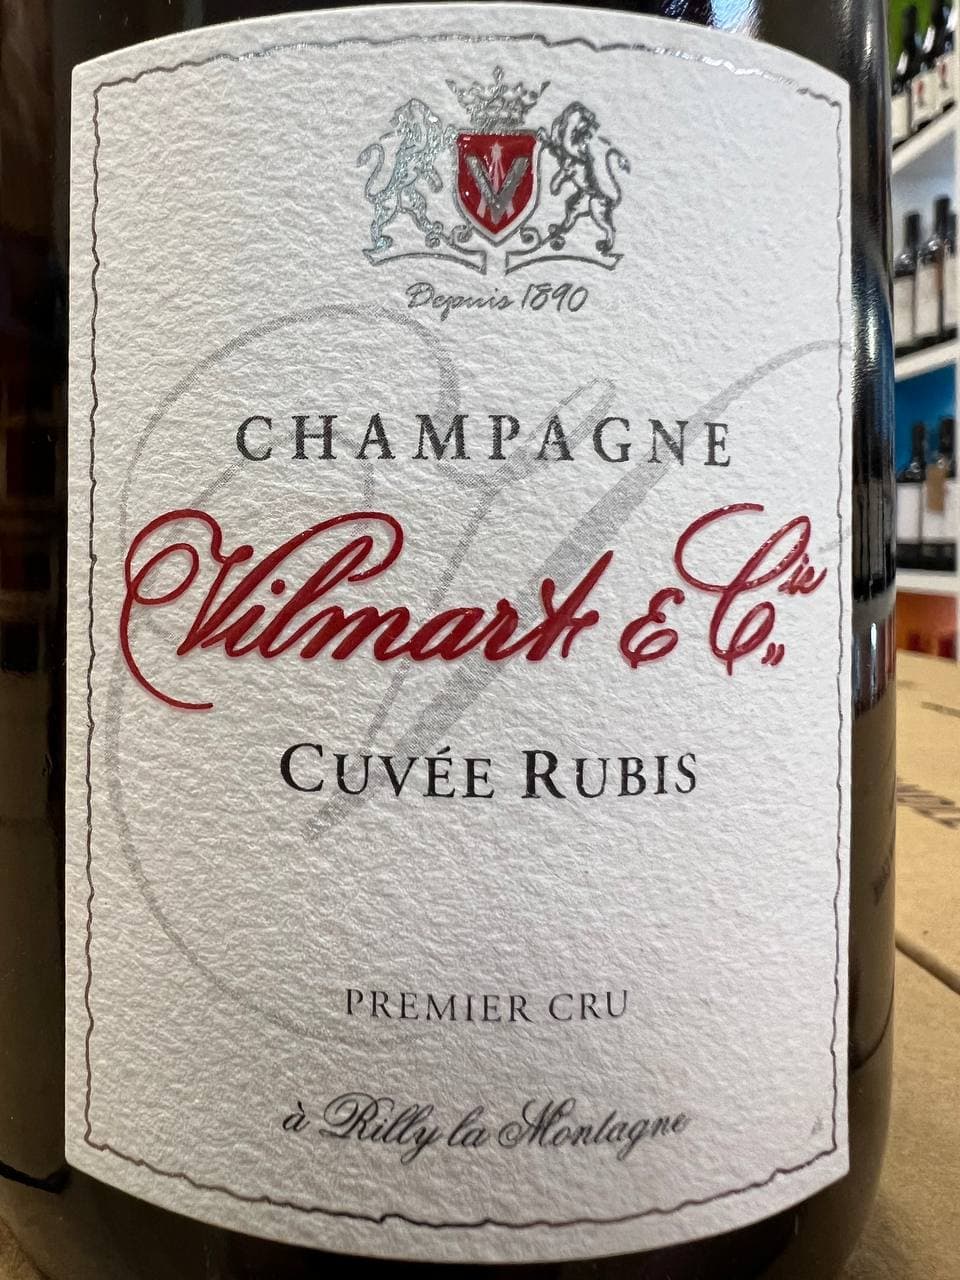 Champagne Brut Premier Cru Vilmart & Cie Cuvée Rubis